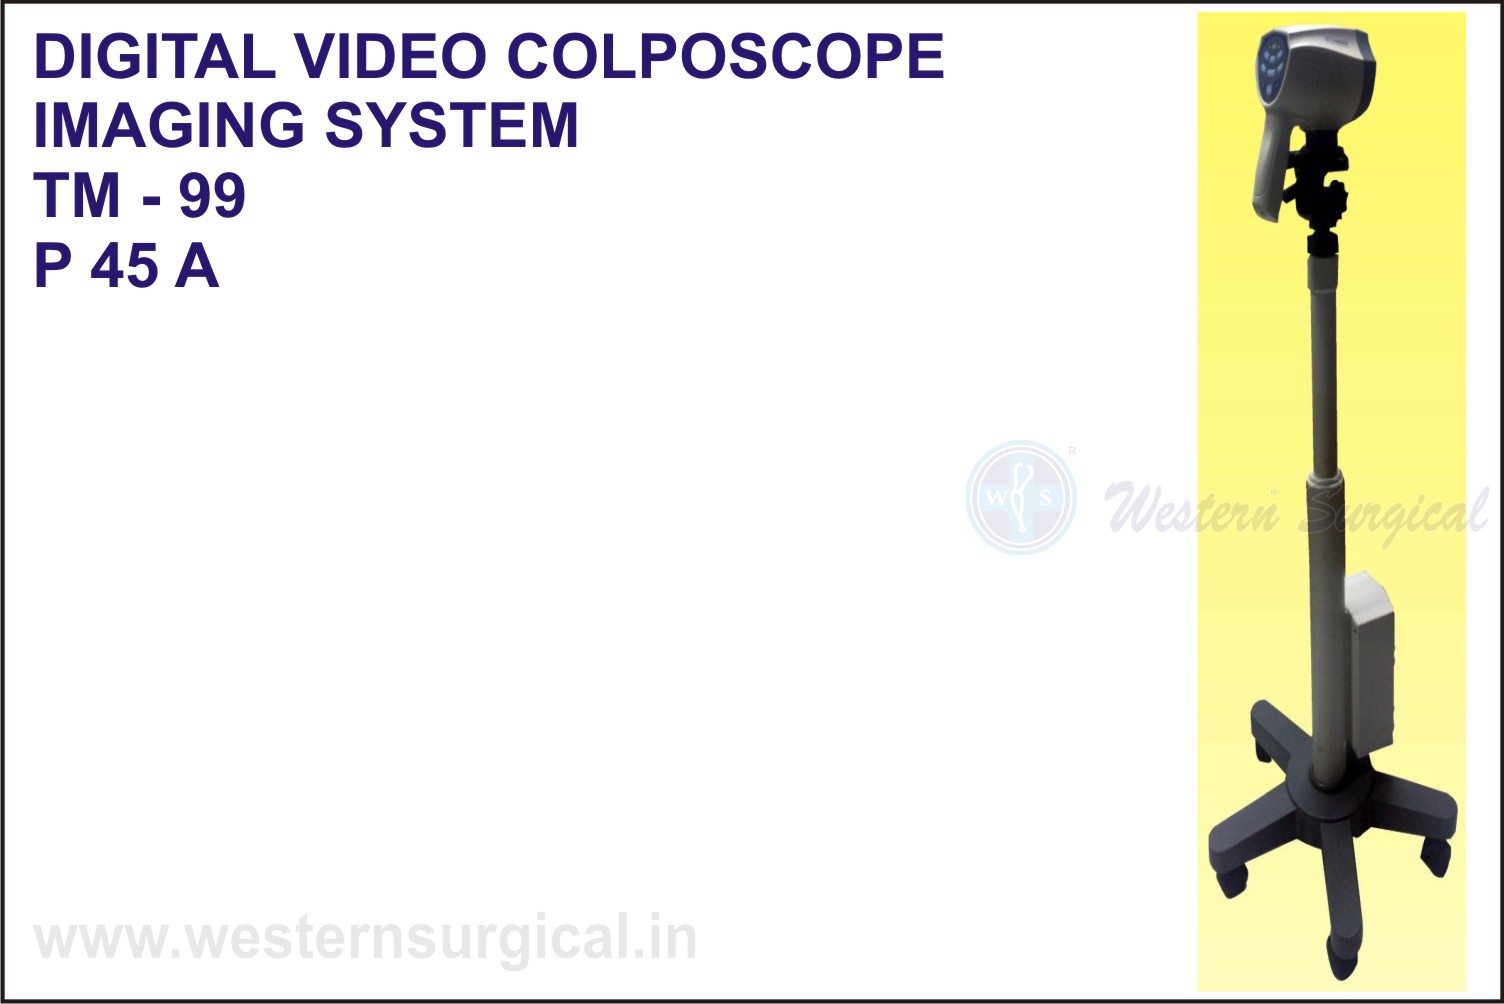 DIGITAL VIDEO COLPOSCOPE IMAGING SYSTEM